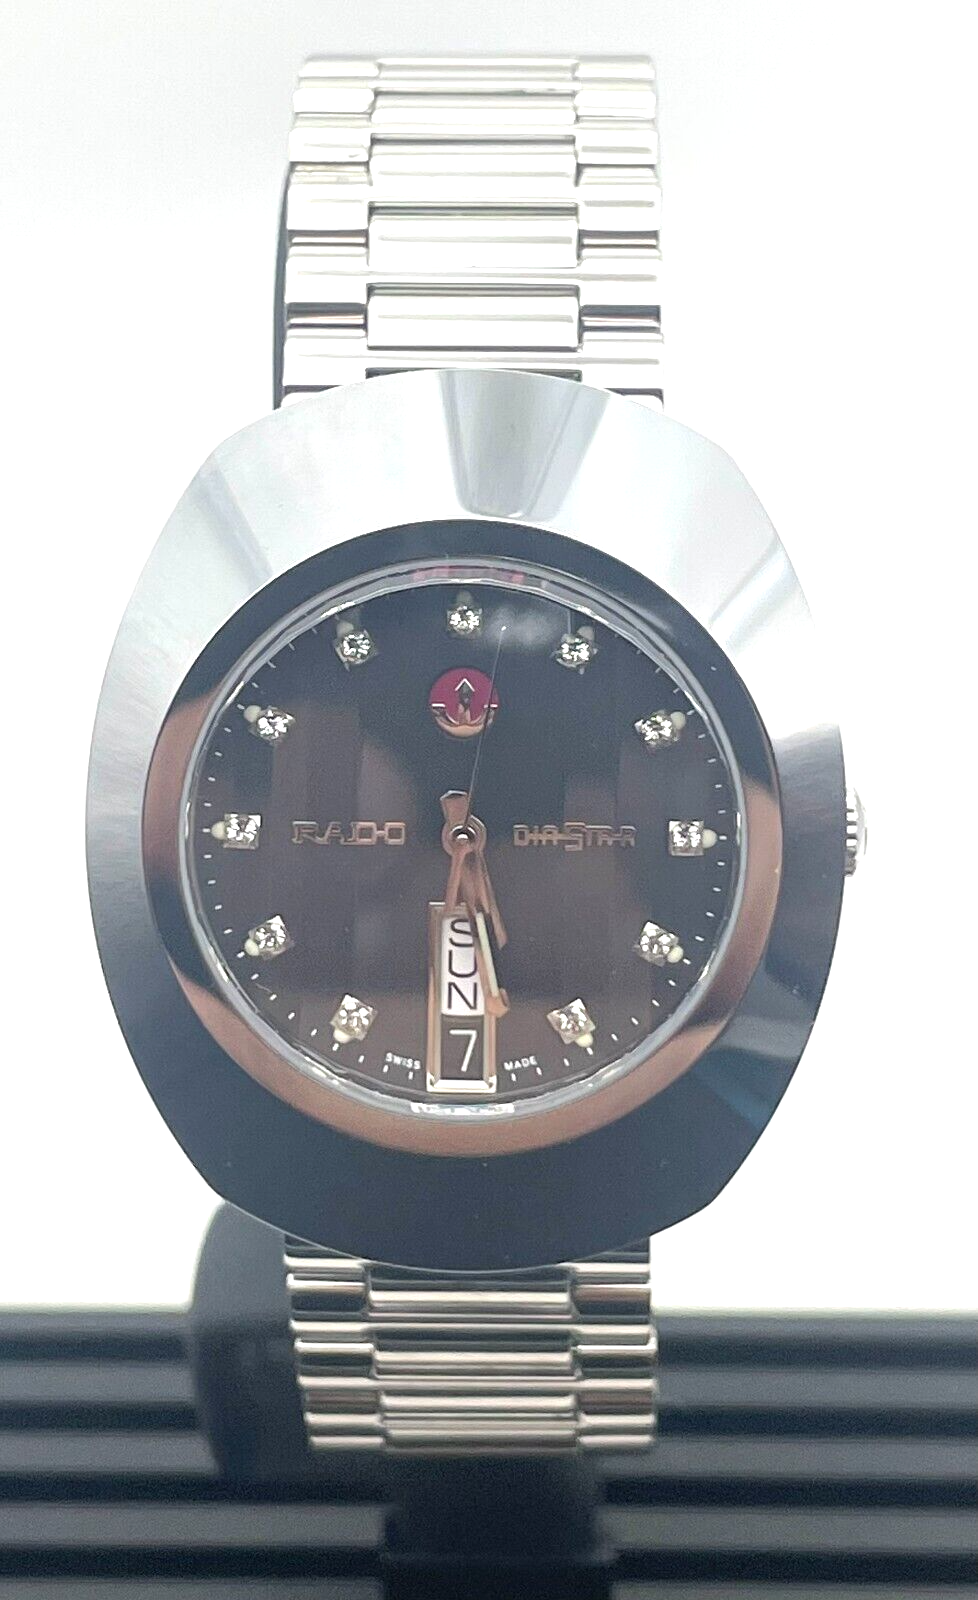 Rado The Original Automatic DiaStar Stainless Steel Men's Watch R12408613